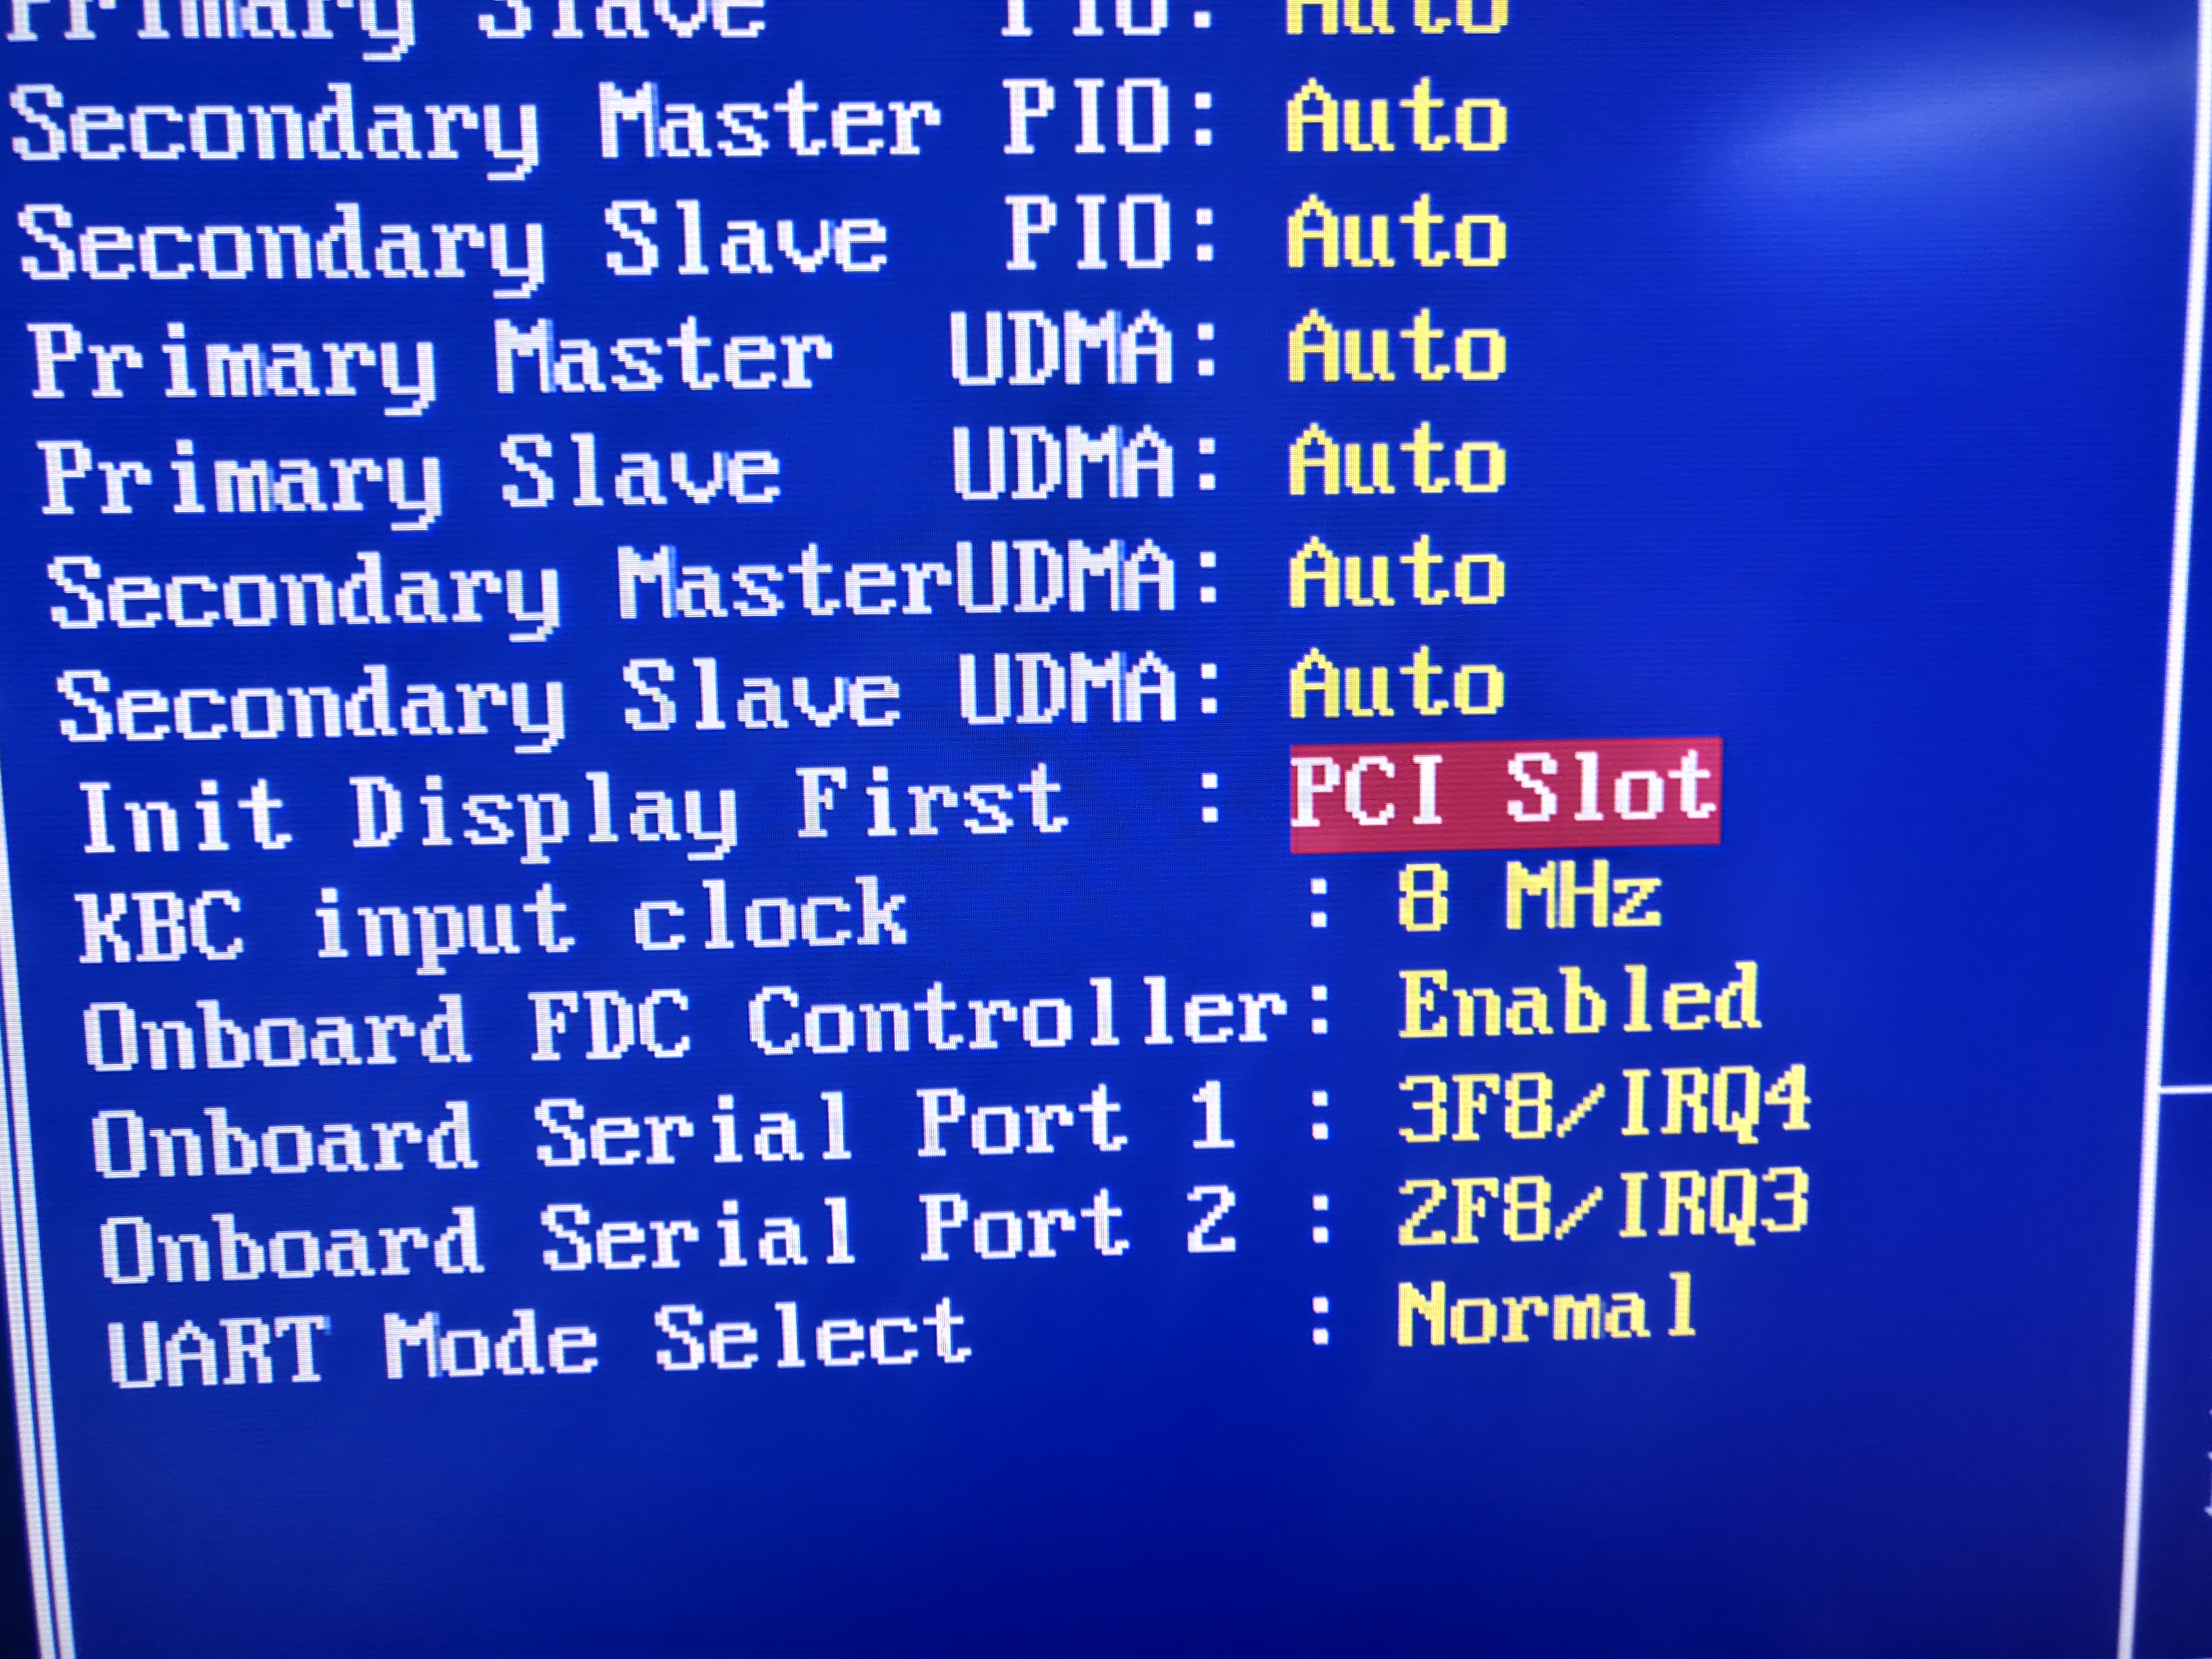 Set init display to PCI!